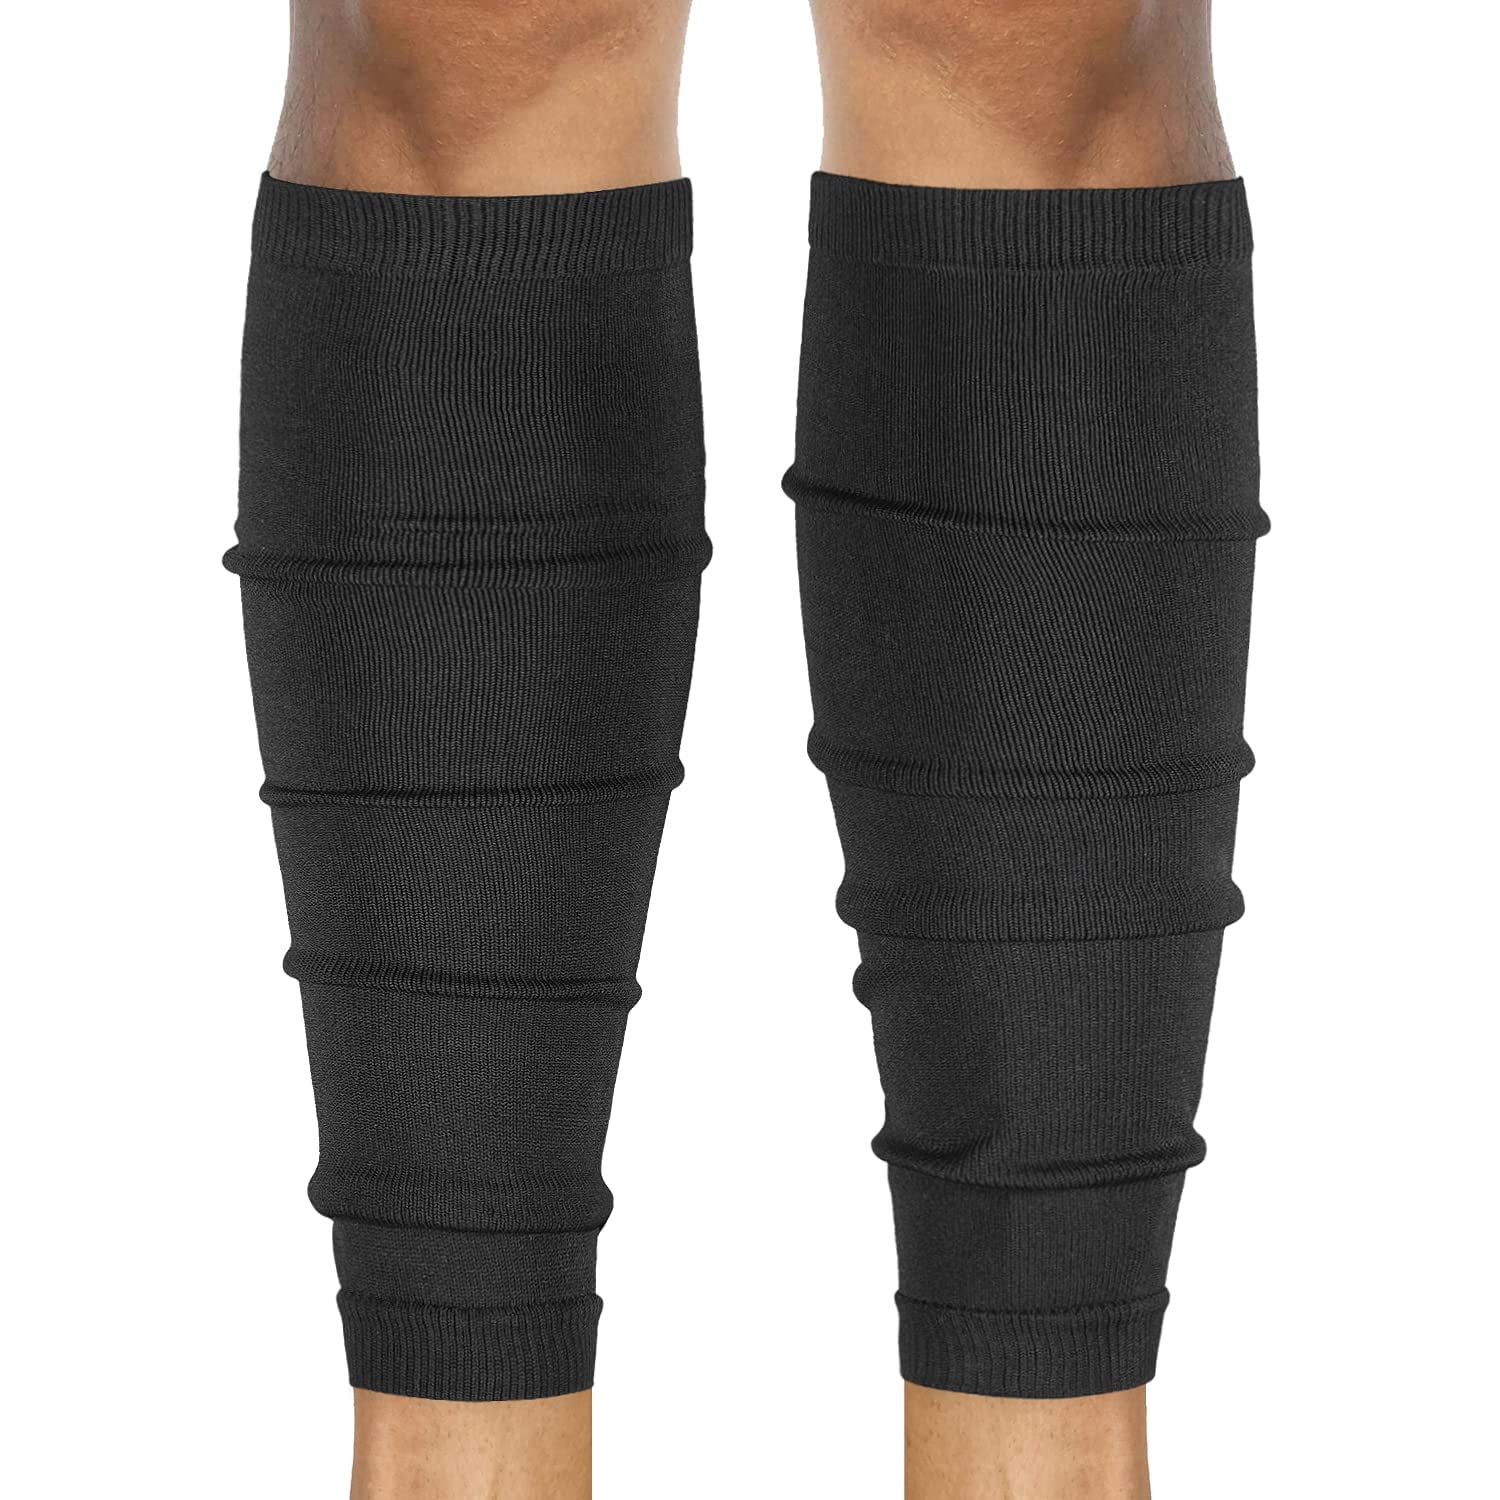 Football Leg Sleeve for Adults & Youth - Calf Compression Leg Sleeves Men  Boy, Leg Sleeves - Black 